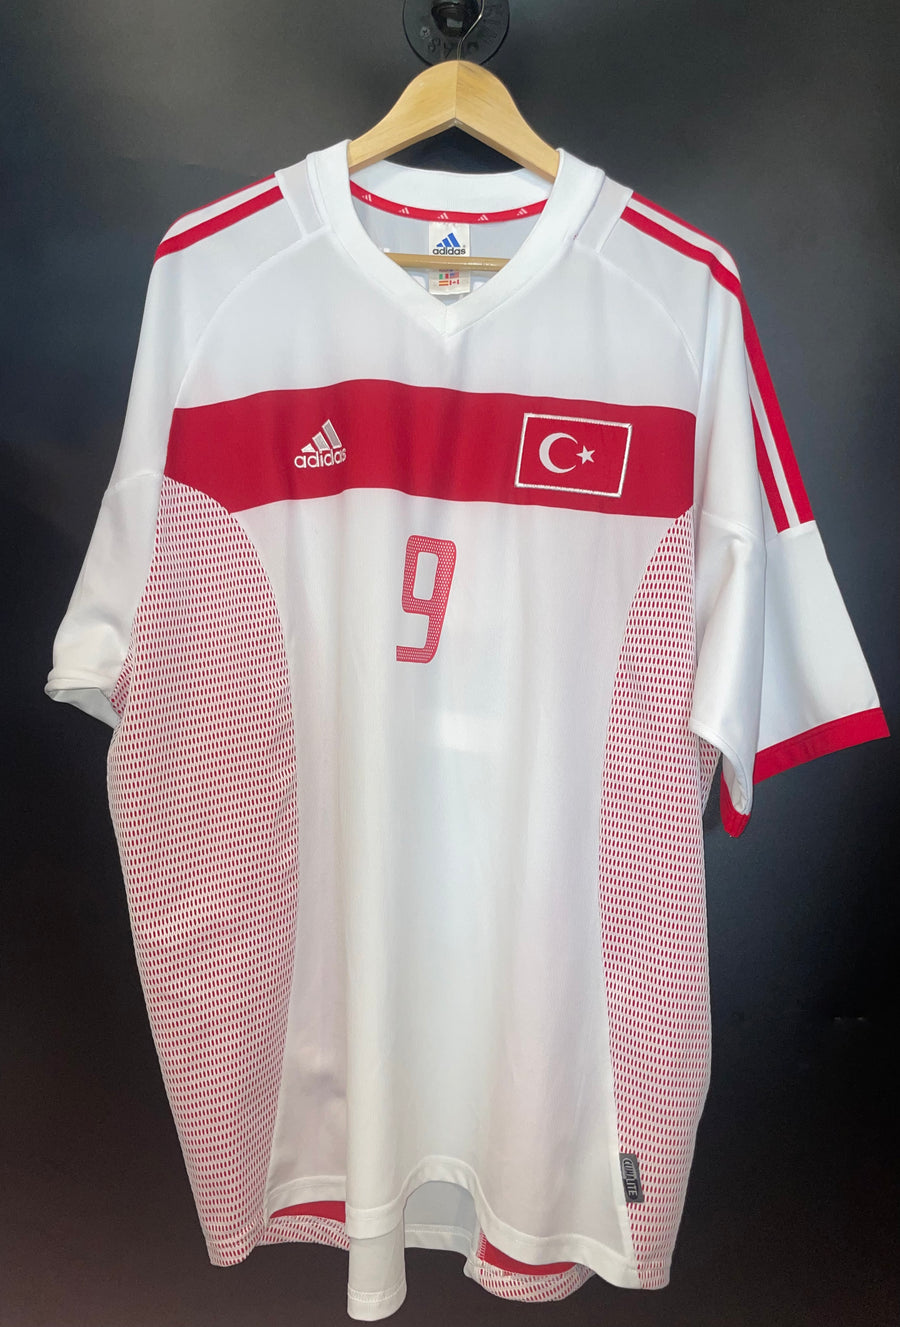 TURKEY HAKAN SUKUR 2002-2003 ORIGINAL JERSEY Size 2XL